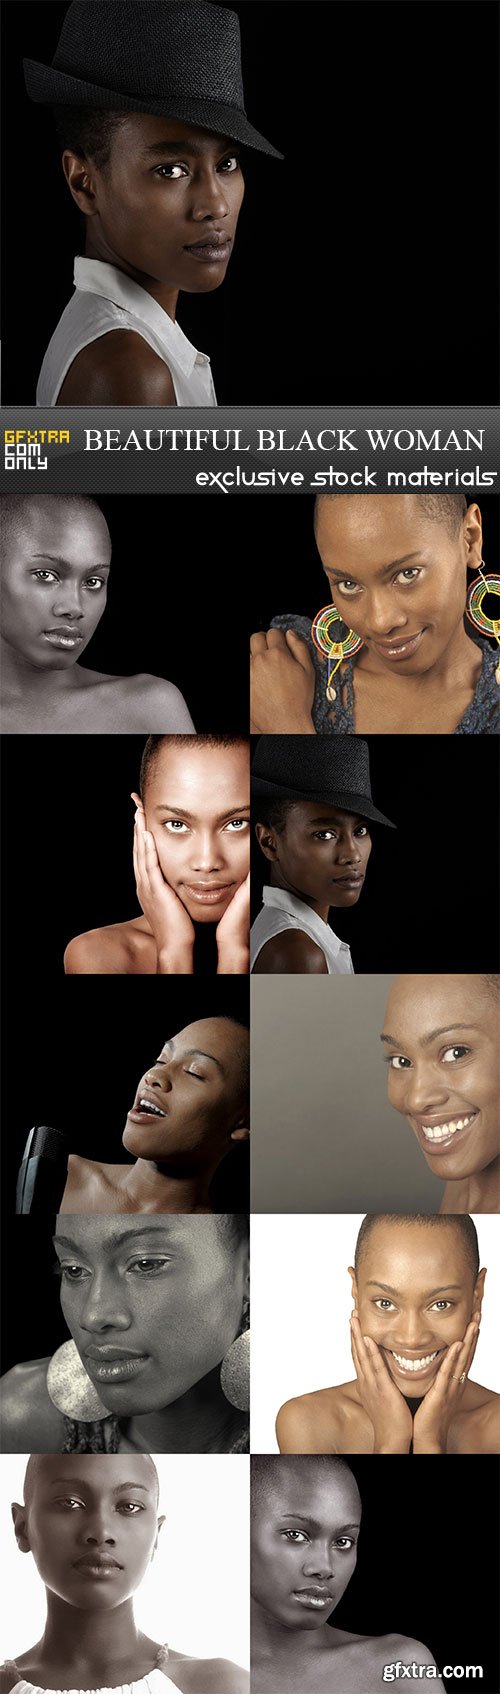 Beautiful Black Woman, 9 x UHQ JPEG